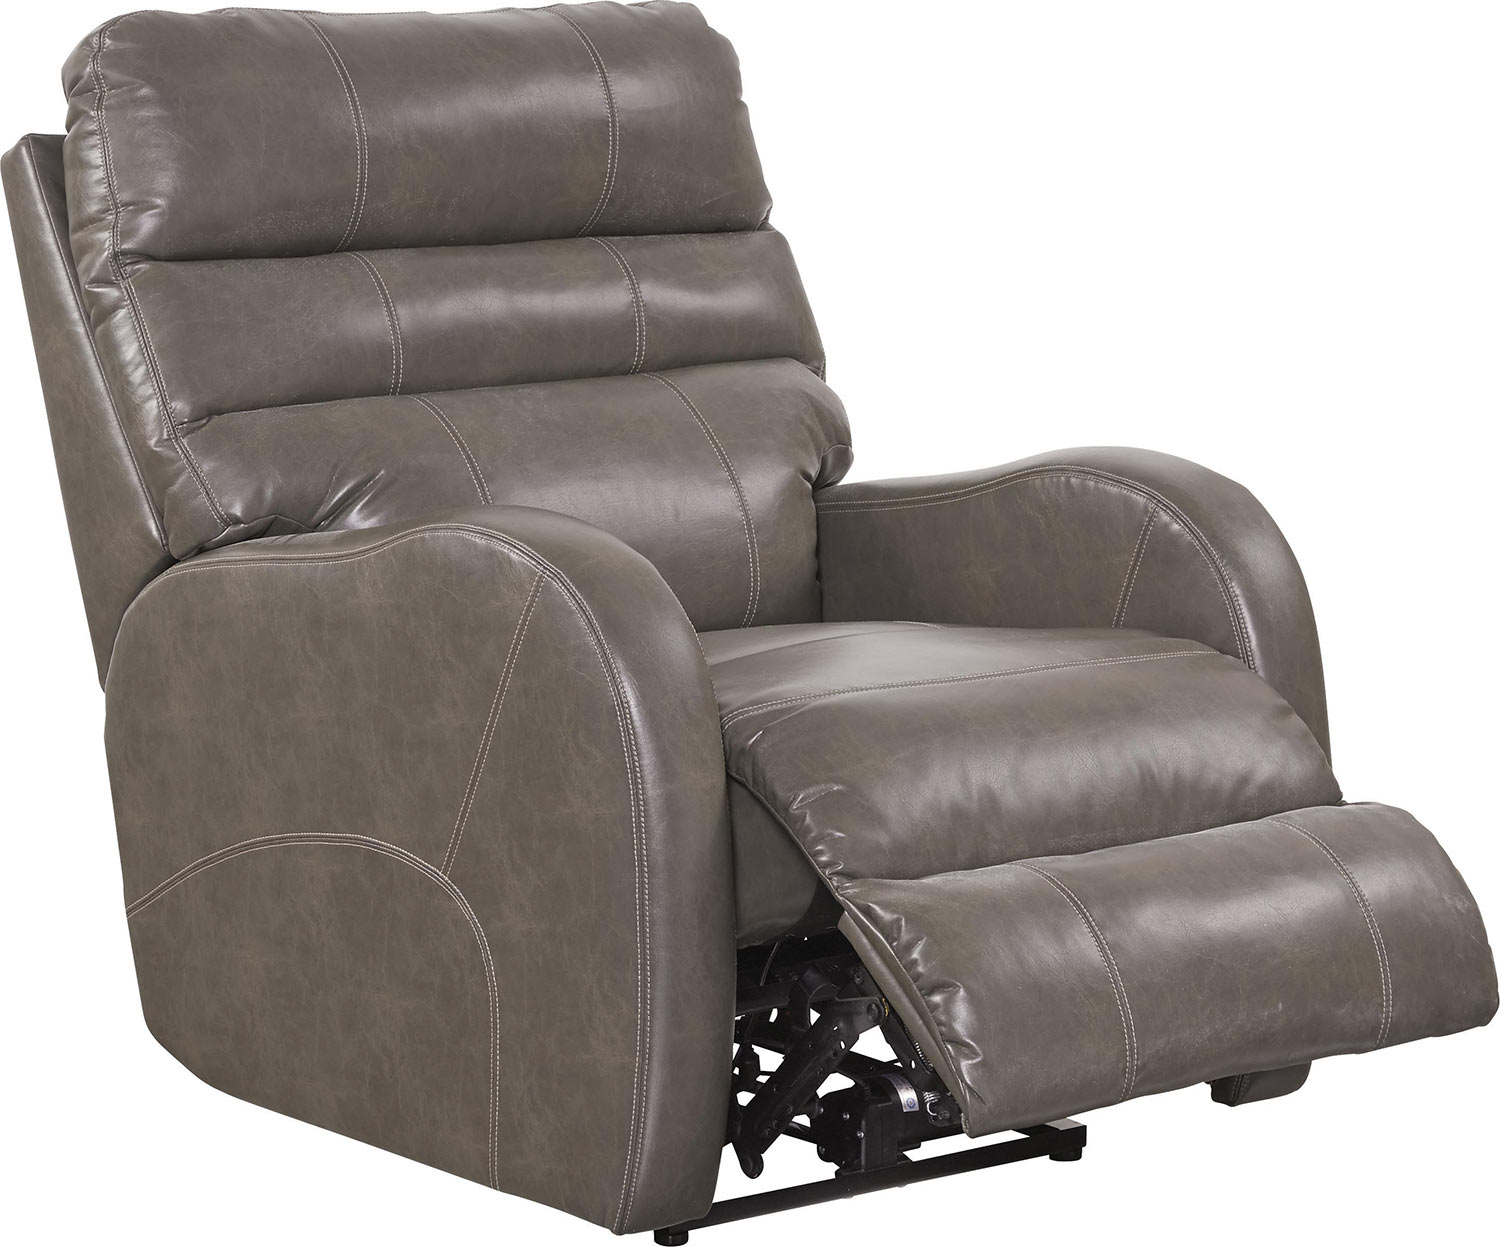 CatNapper Searcy Rocker Recliner Chair - Ash